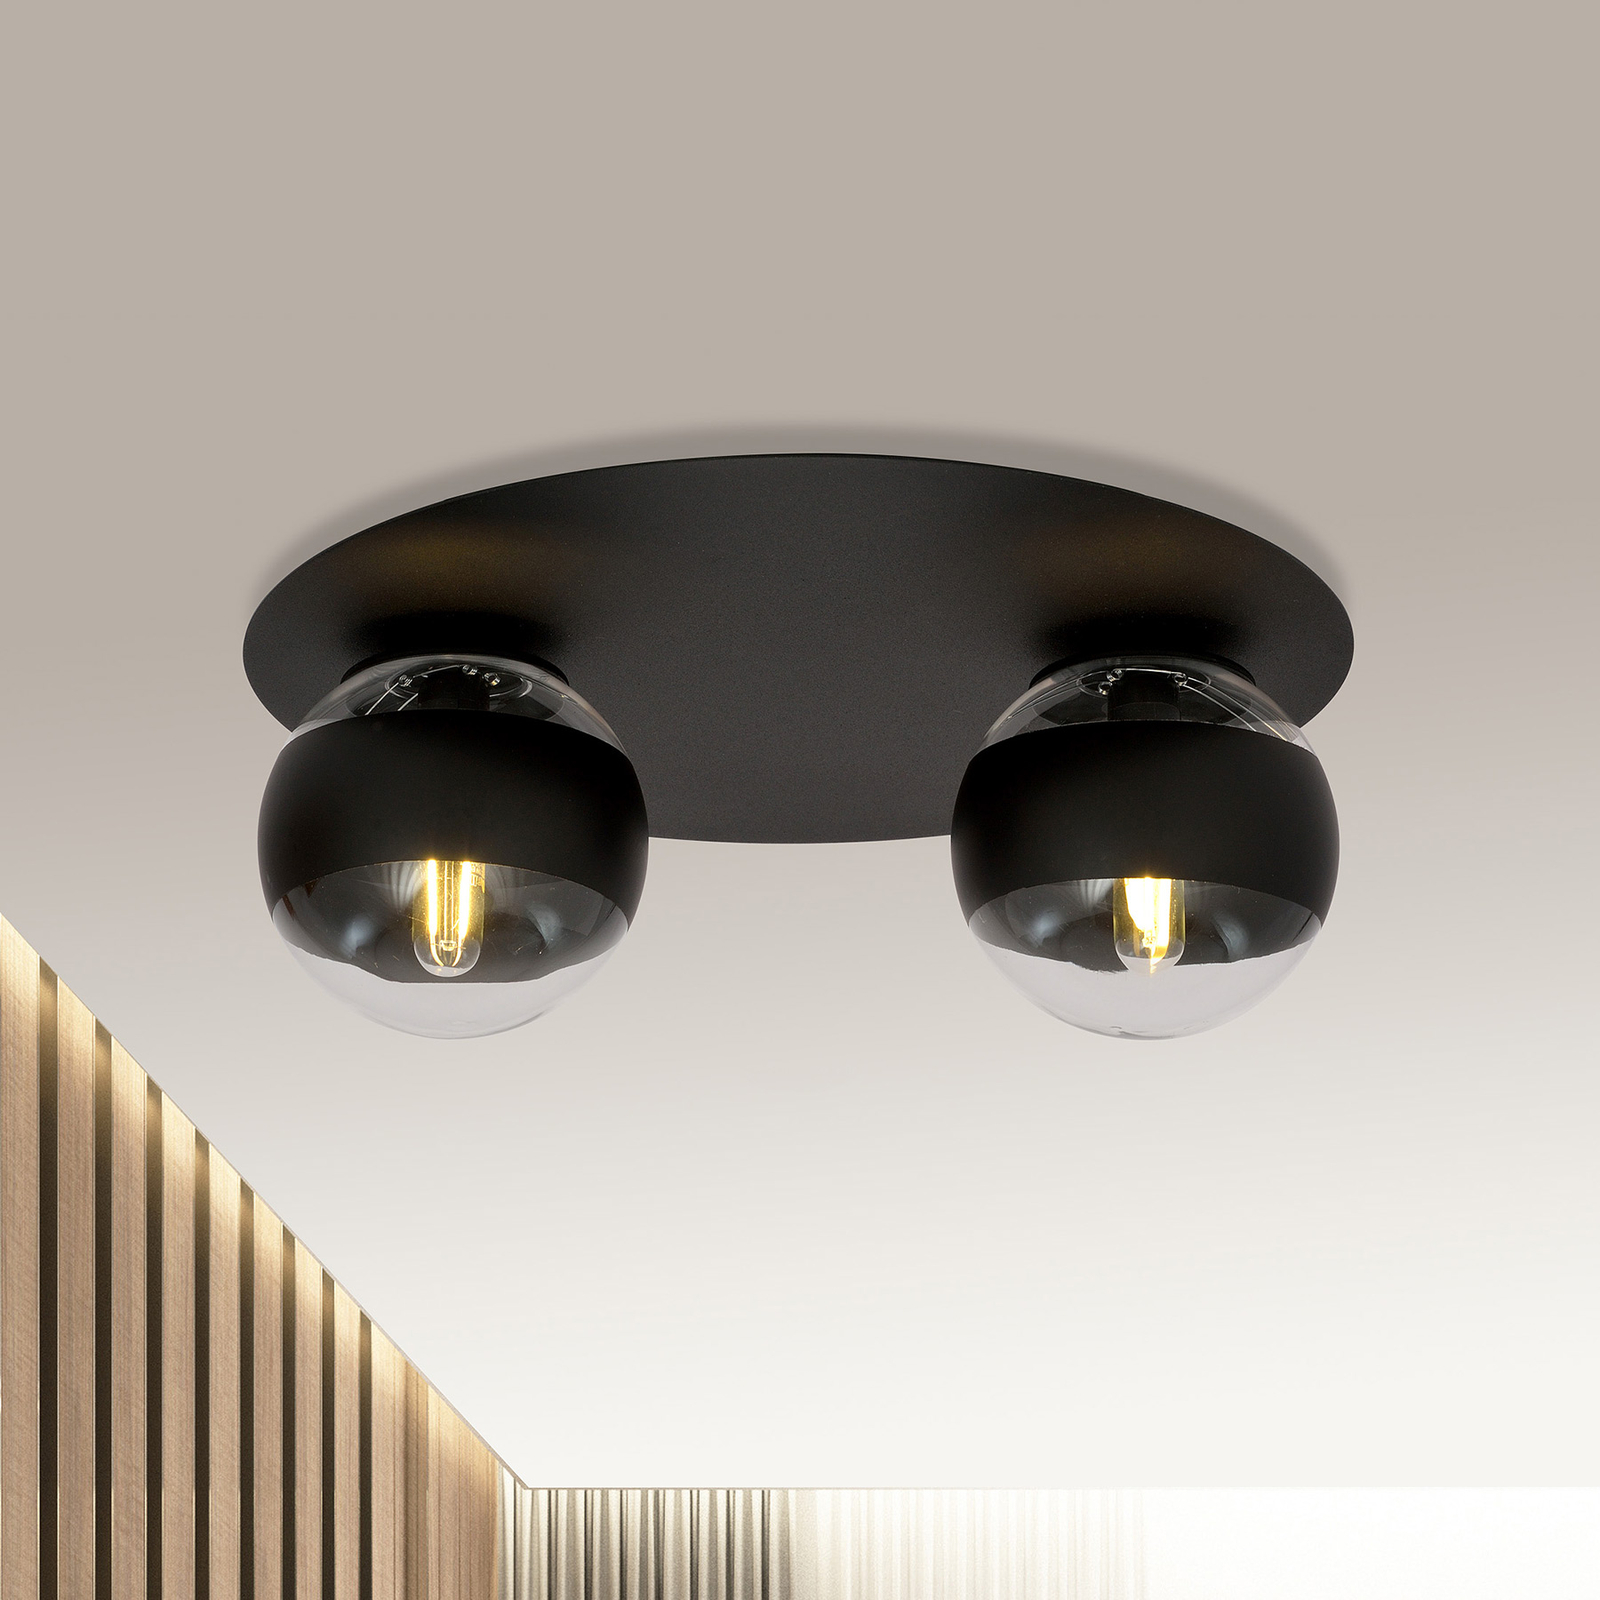 Kenzo ceiling light, black/clear, two-bulb